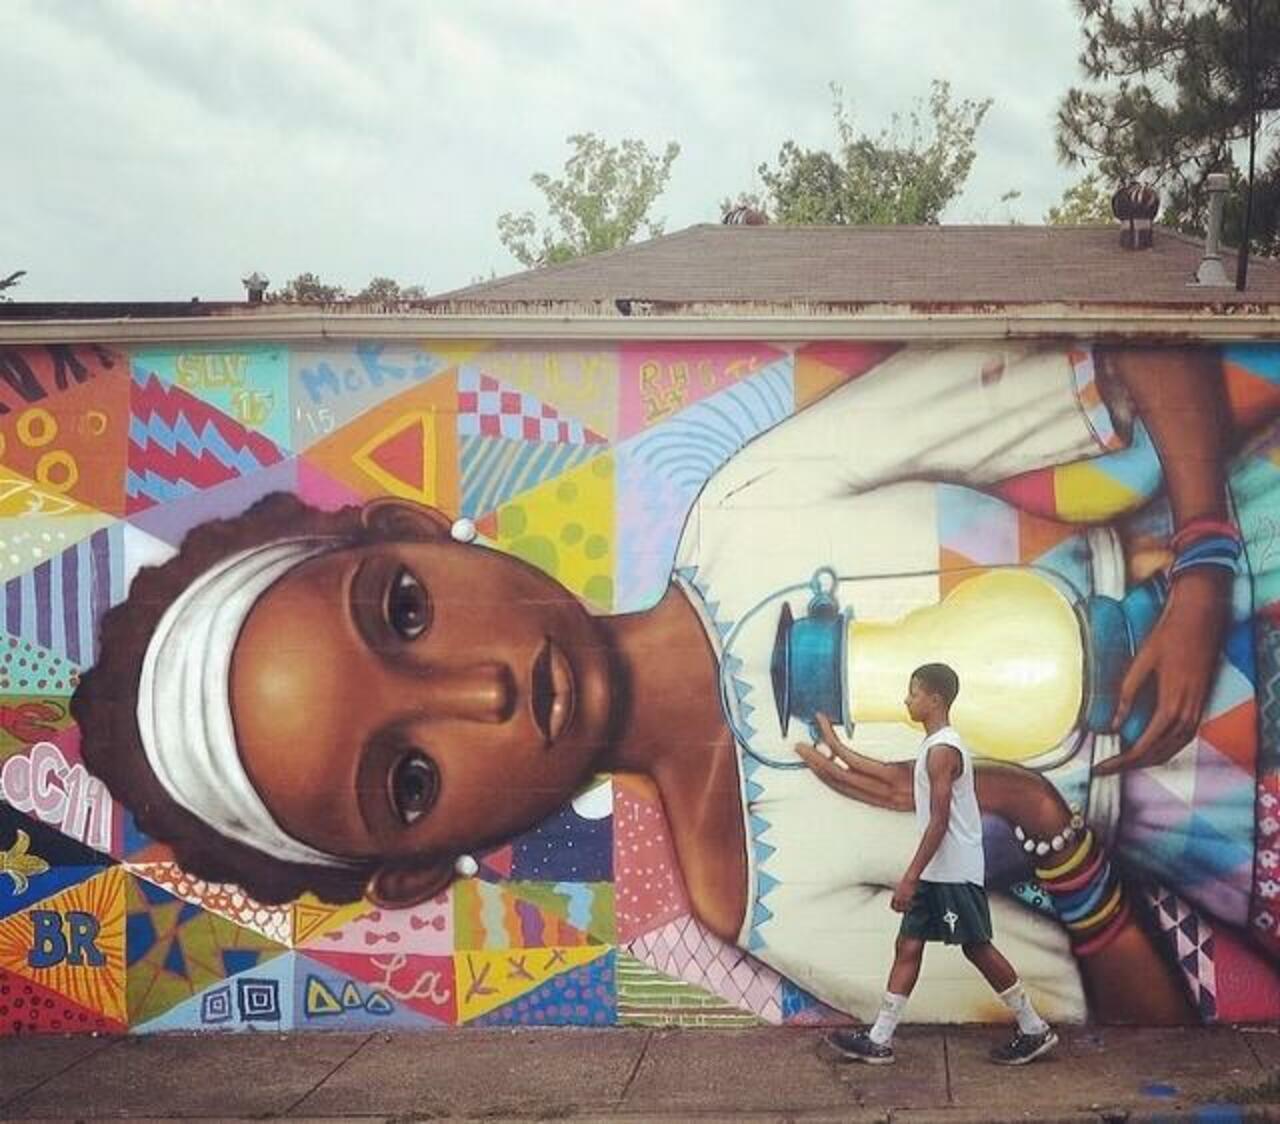 RT @designopinion: Artist #Seth recent wonderful Street Art wall in Baton Rouge, Louisiana, USA #art #mural #graffiti #streetart https://t.co/N4GF9XdXPa